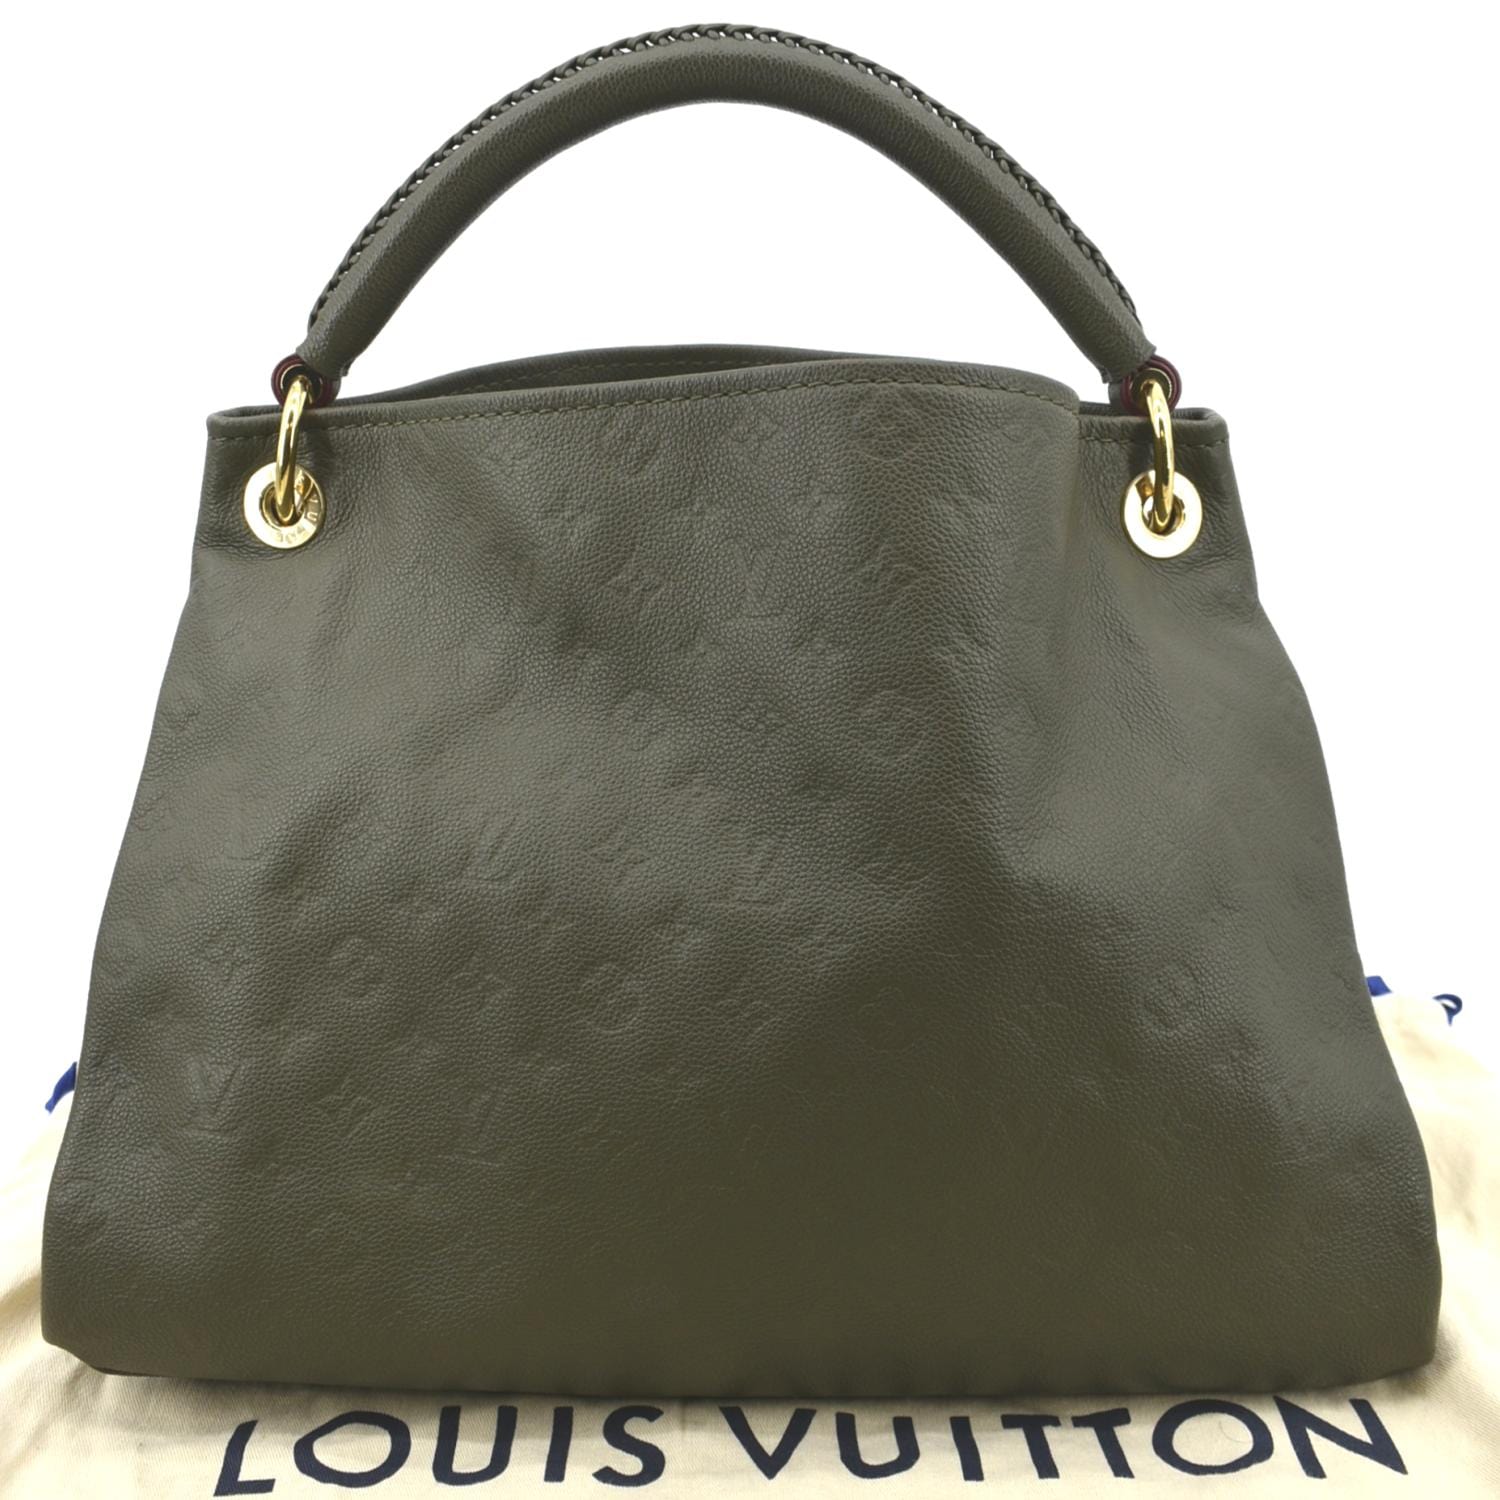 Louis Vuitton - Authenticated Artsy Handbag - Leather Beige Plain for Women, Good Condition